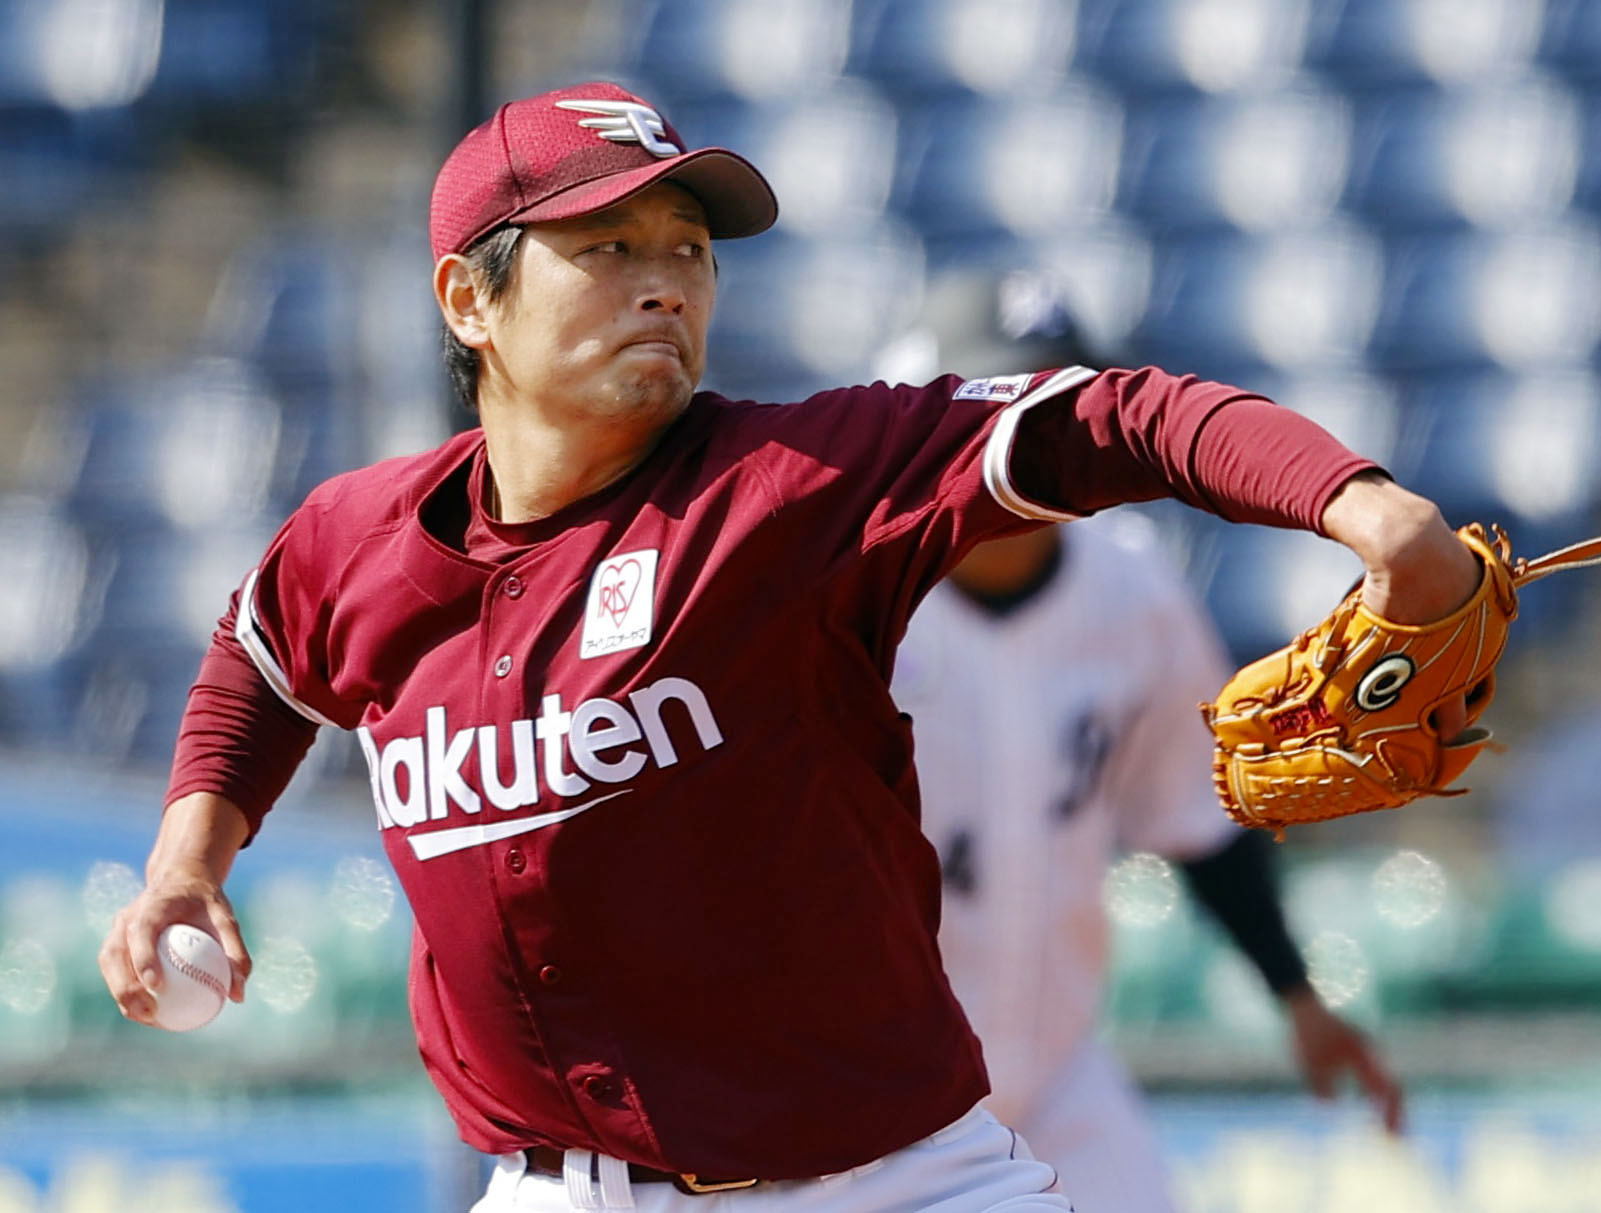 Baseball: Retired slugger Matsui relishes life in New York as